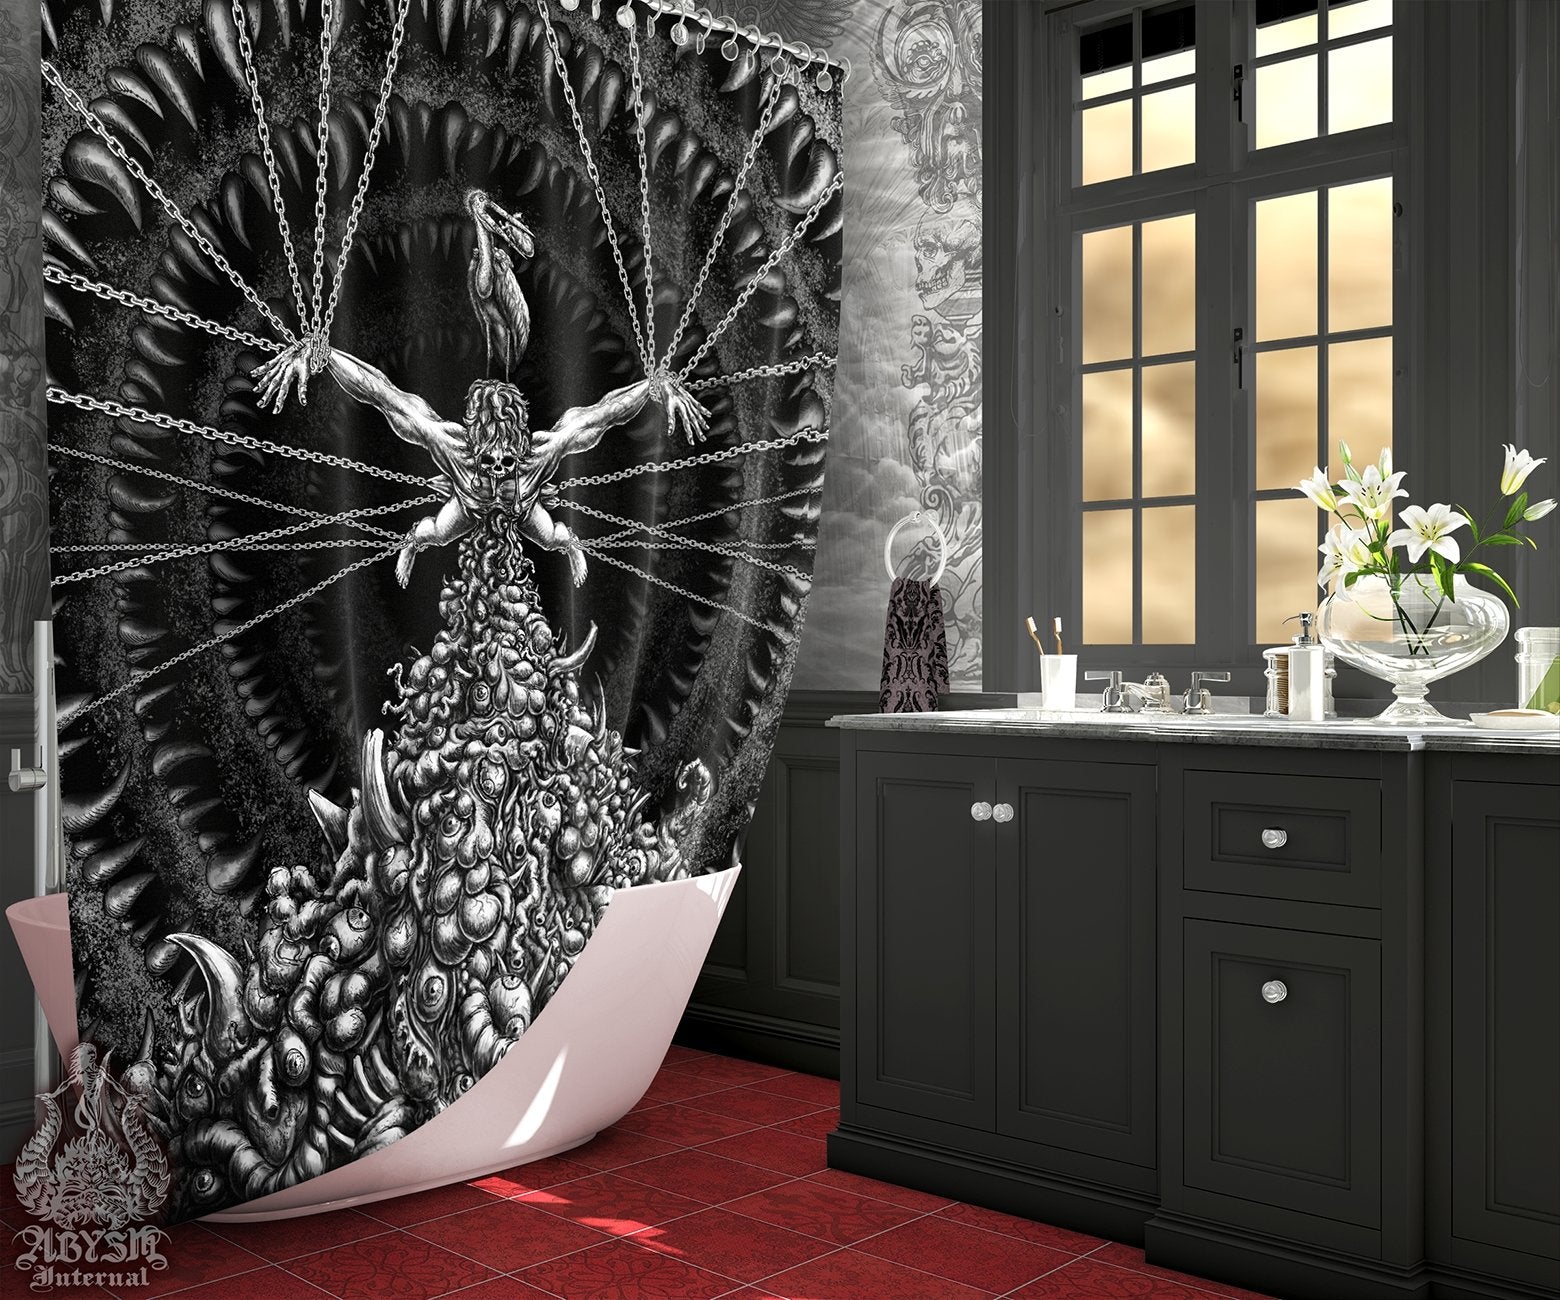 Horror Shower Curtain, Goth Bathroom Decor - Gothic Hell, Purging - Abysm Internal